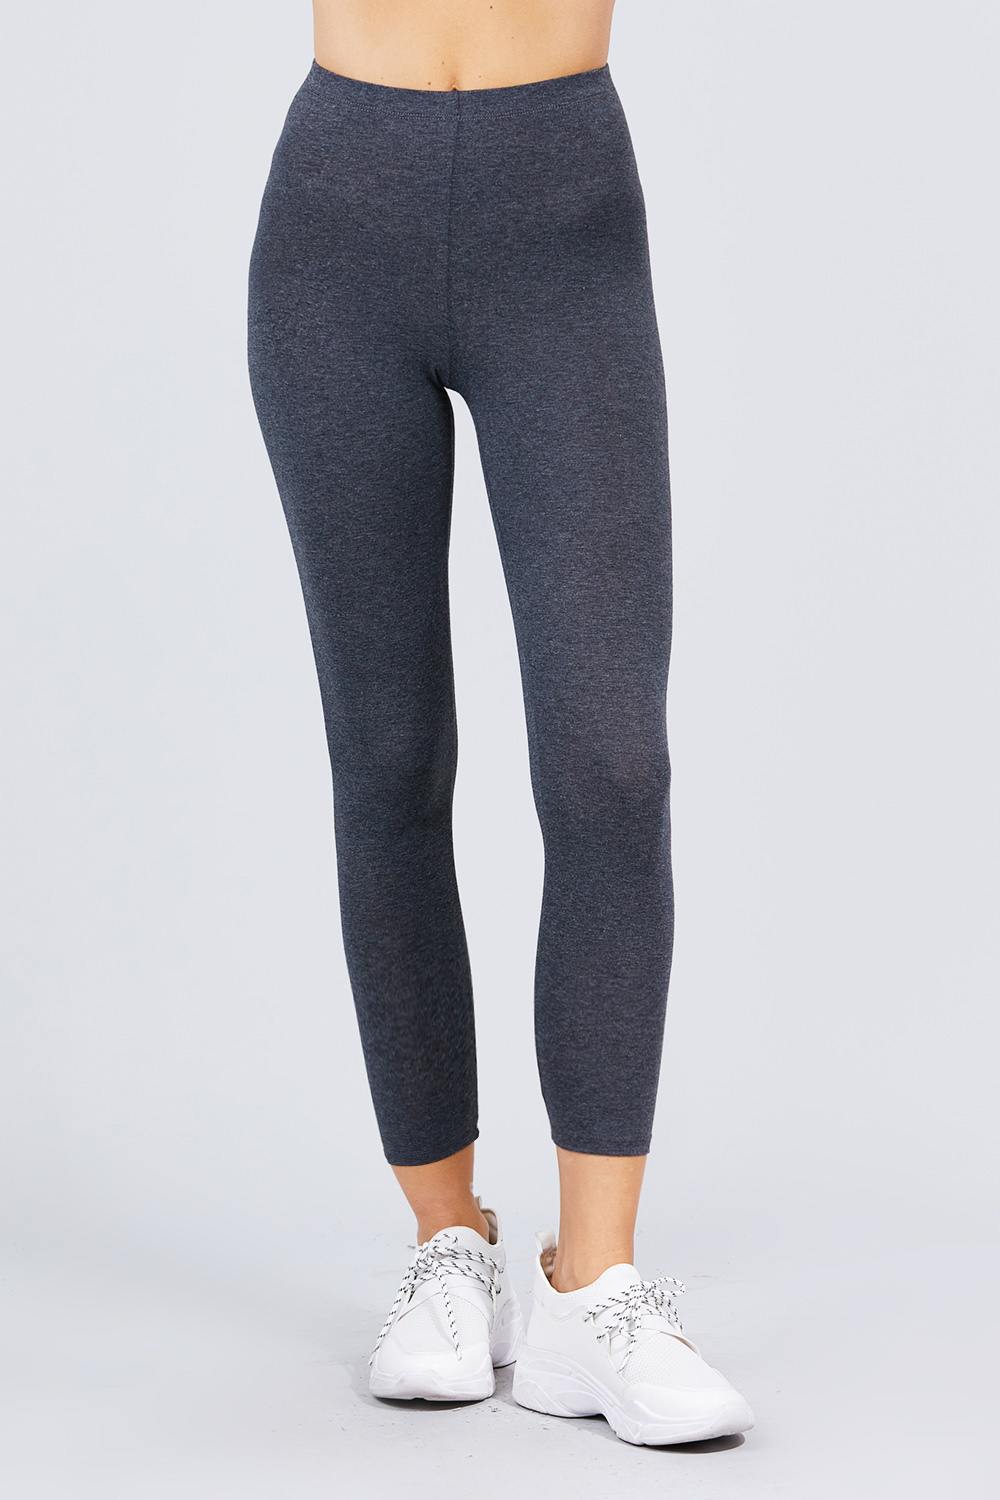 Cotton Spandex Jersey Long - Charcoal Grey / S Pants Girl Code